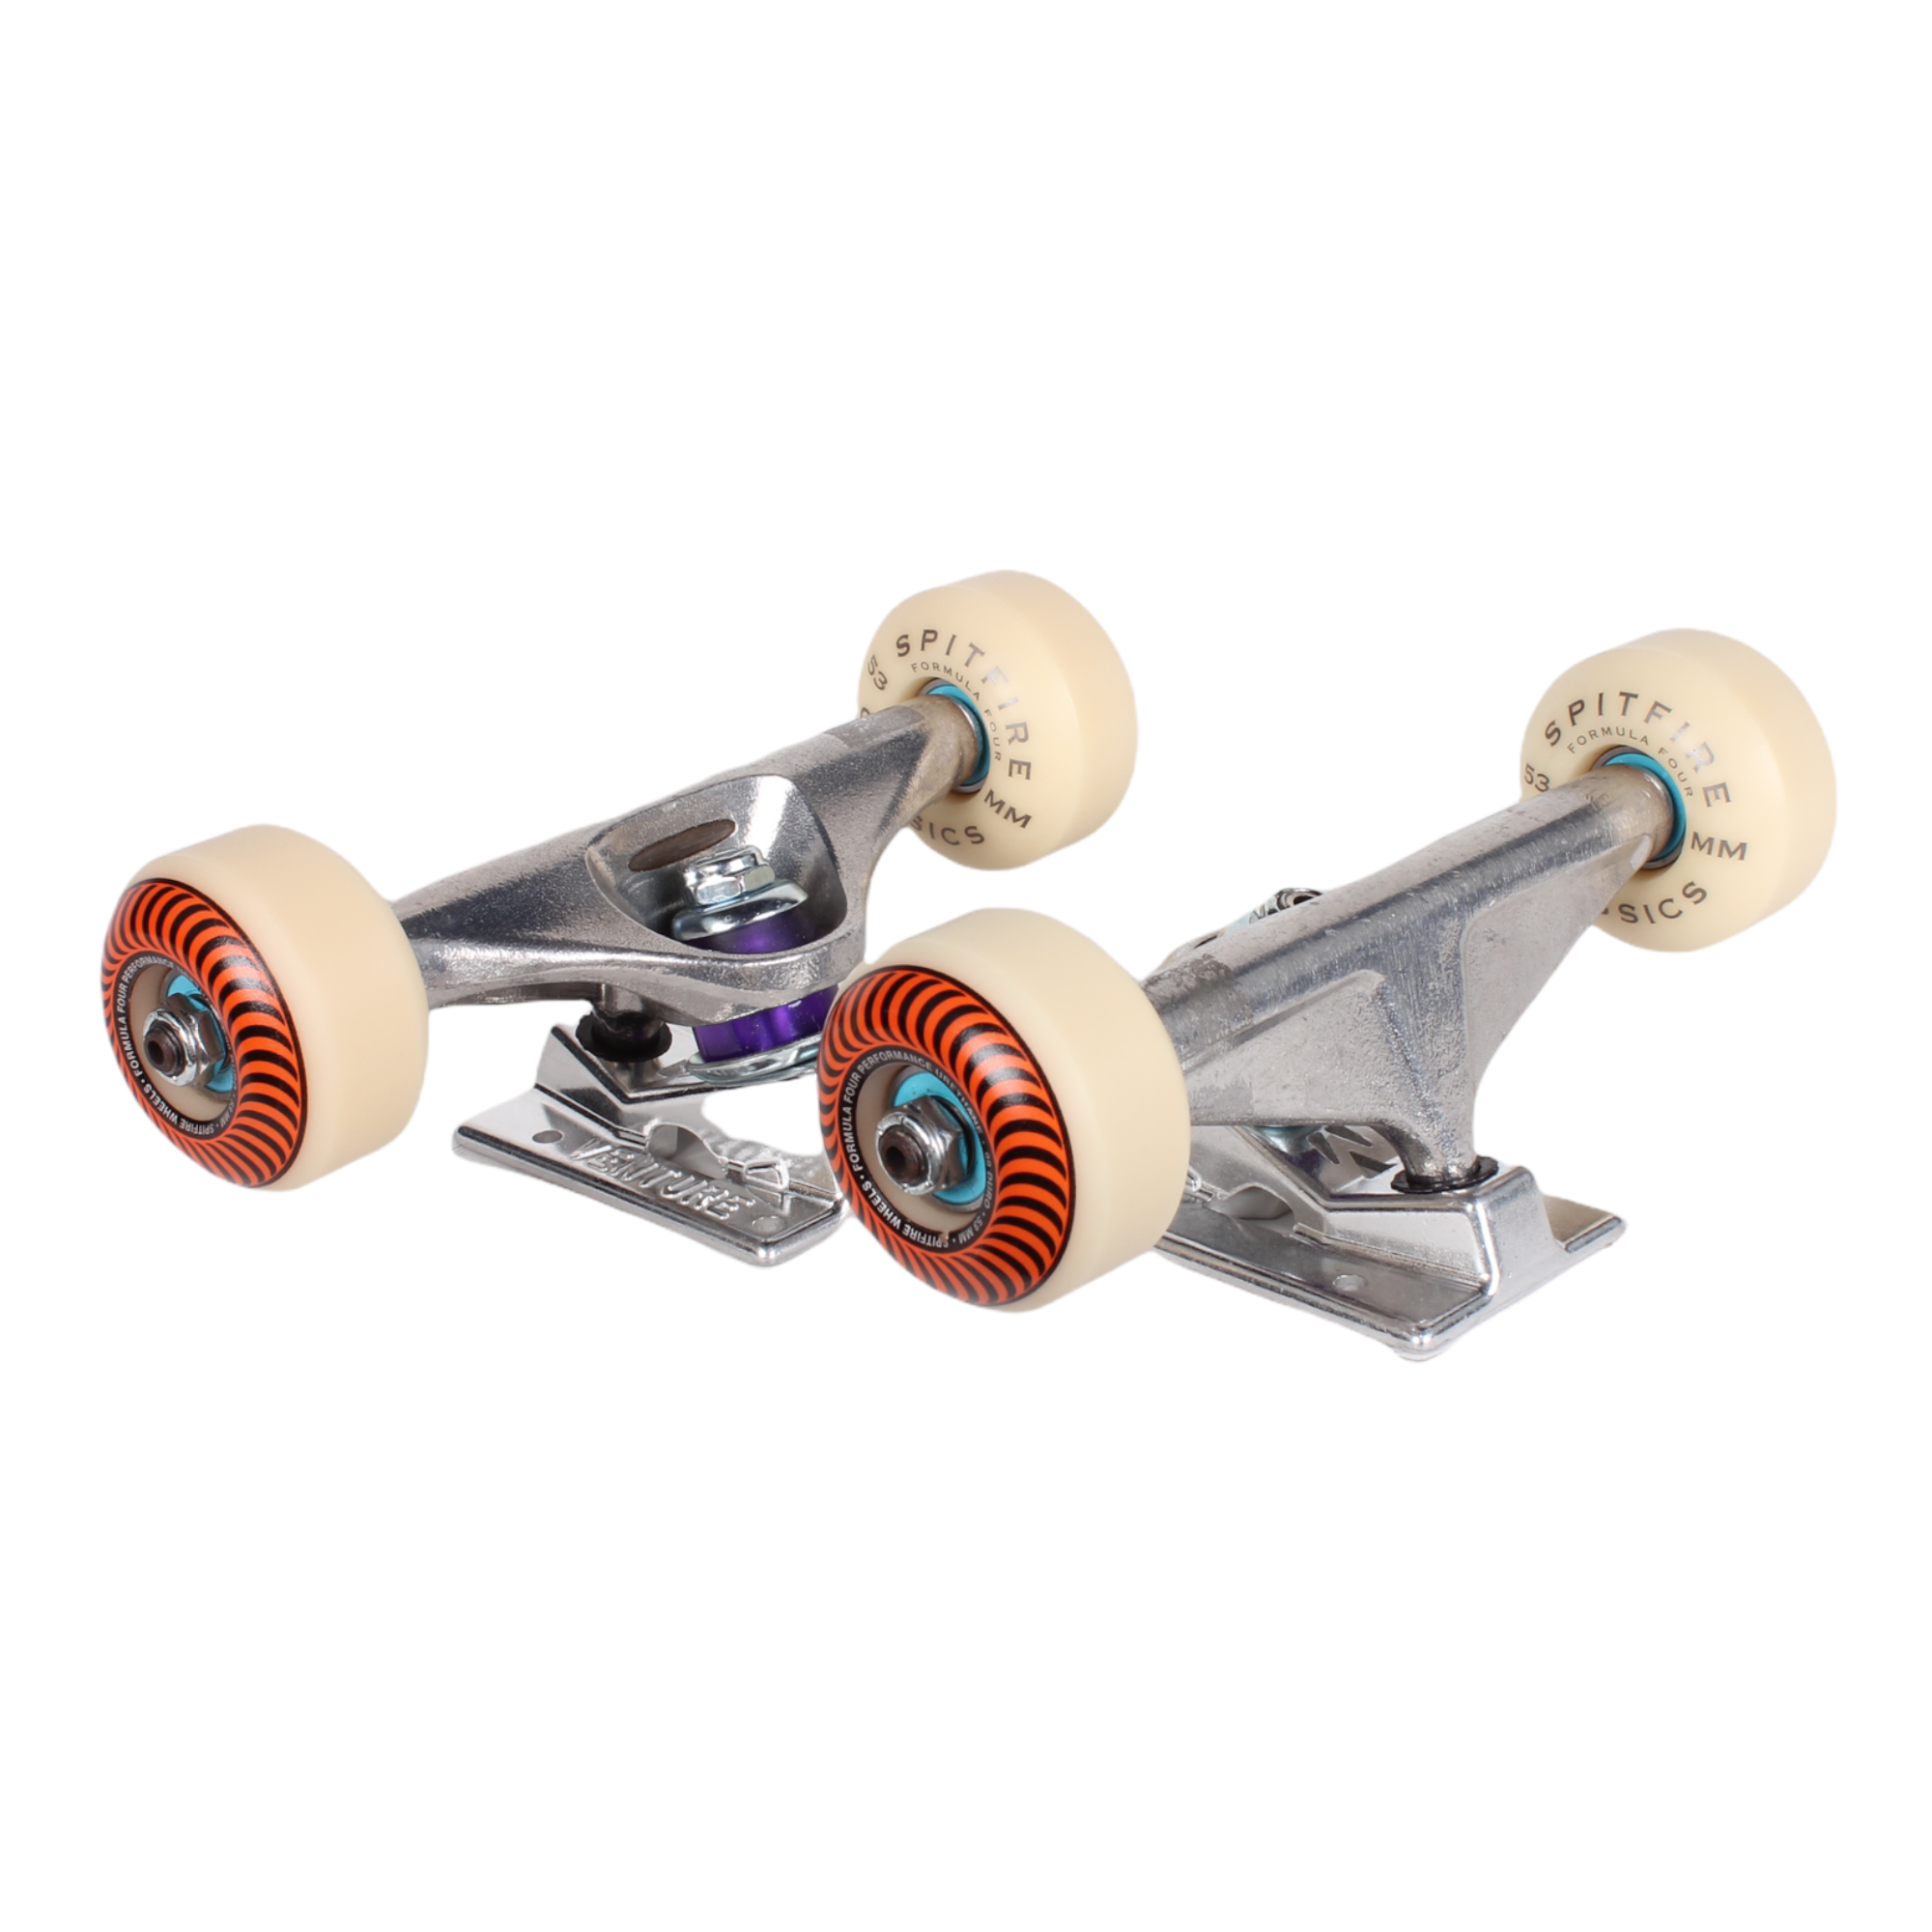 Skateboard Griptape, Skateboard Parts